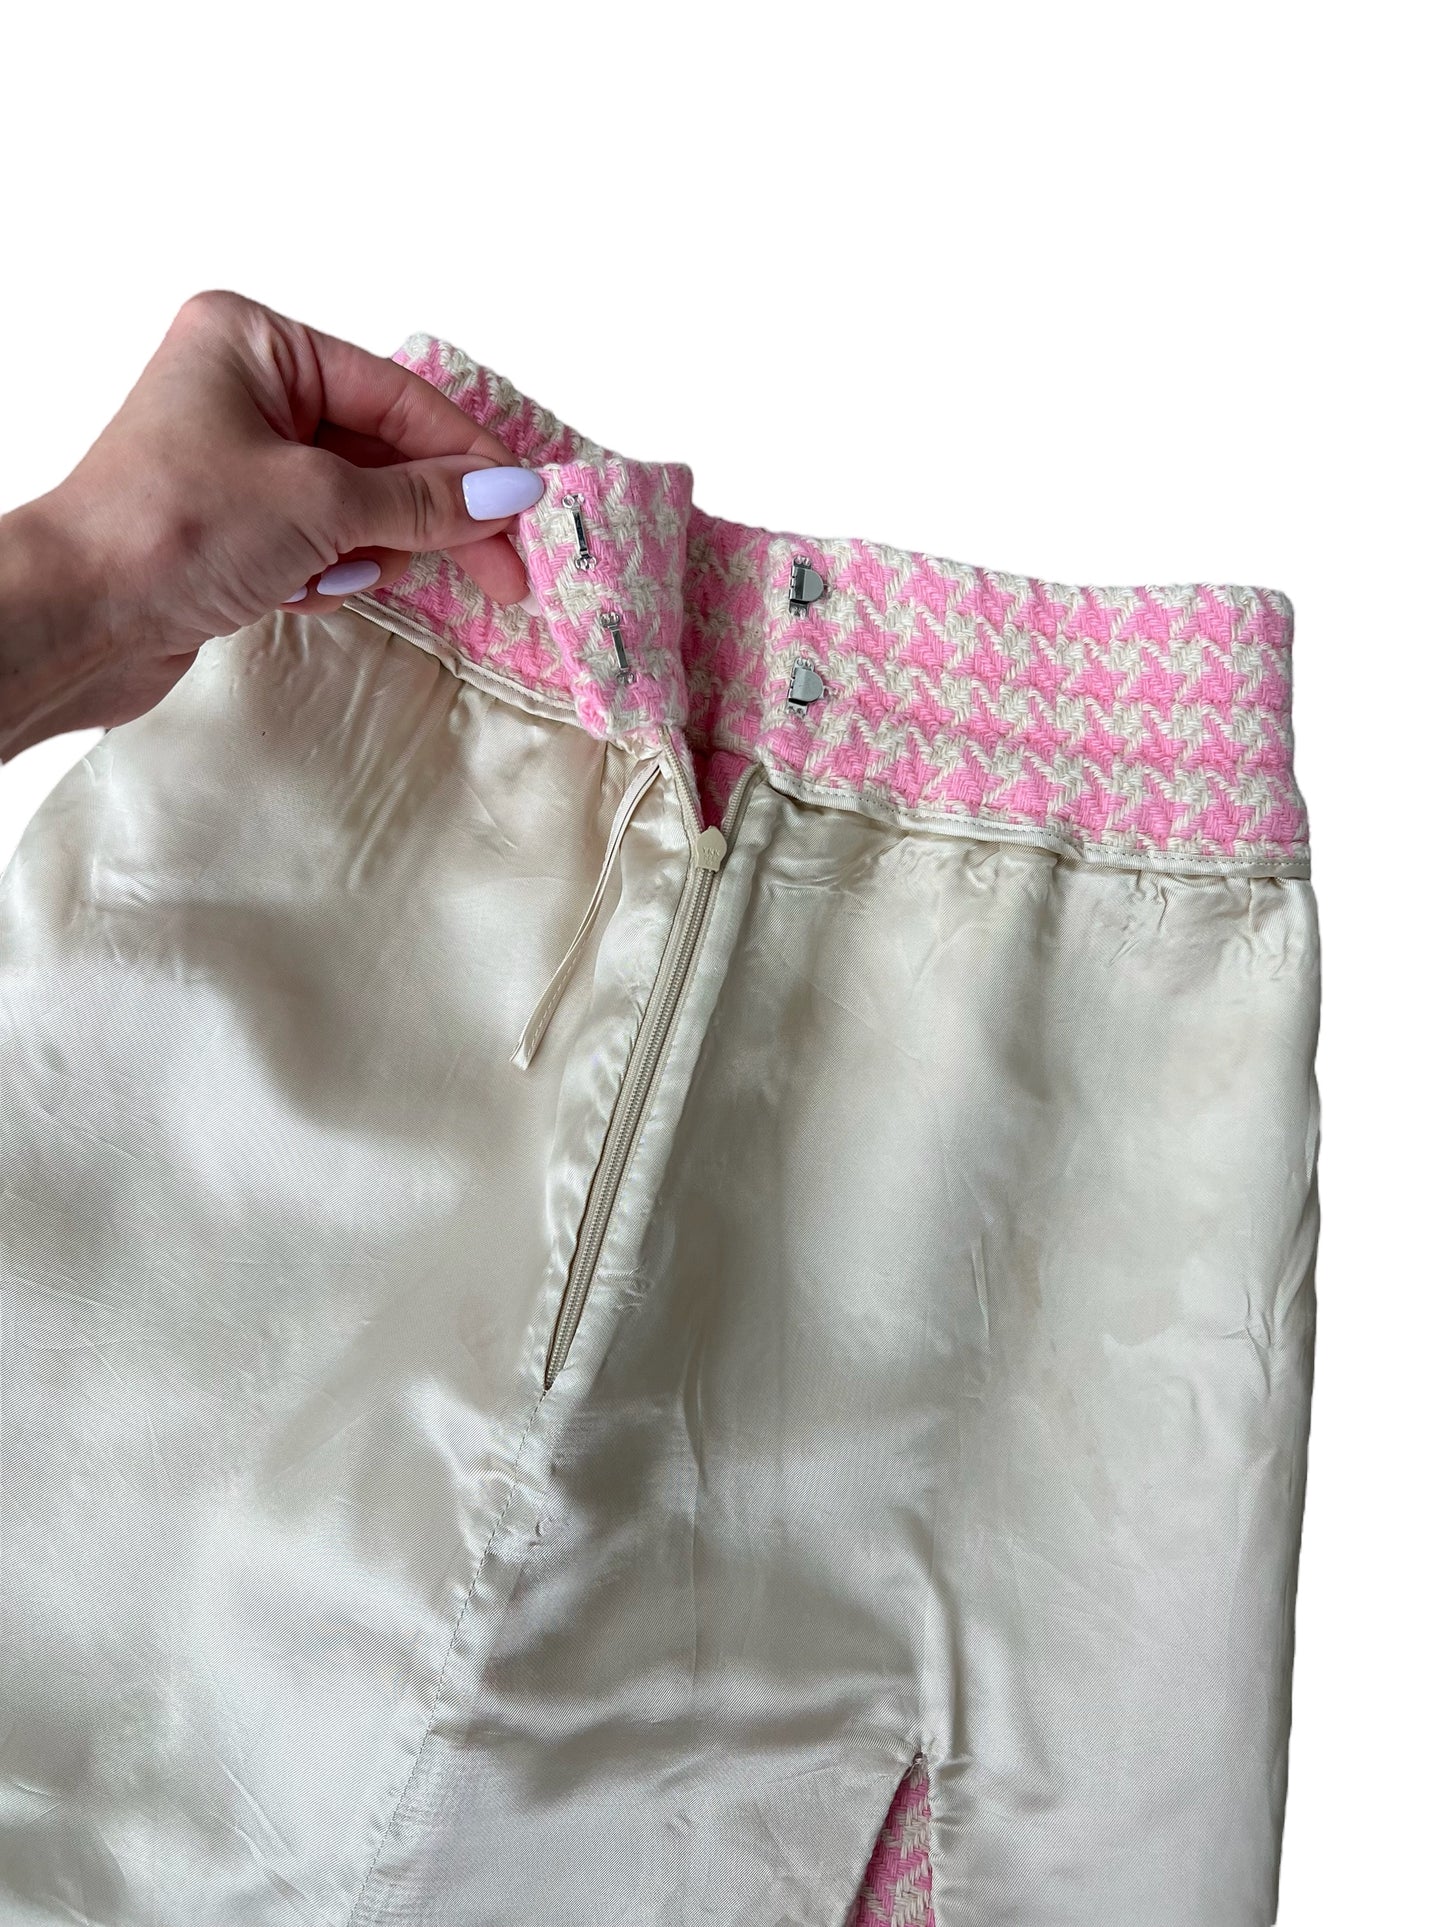 New Miu Miu Pink Skirt Size 38/2US